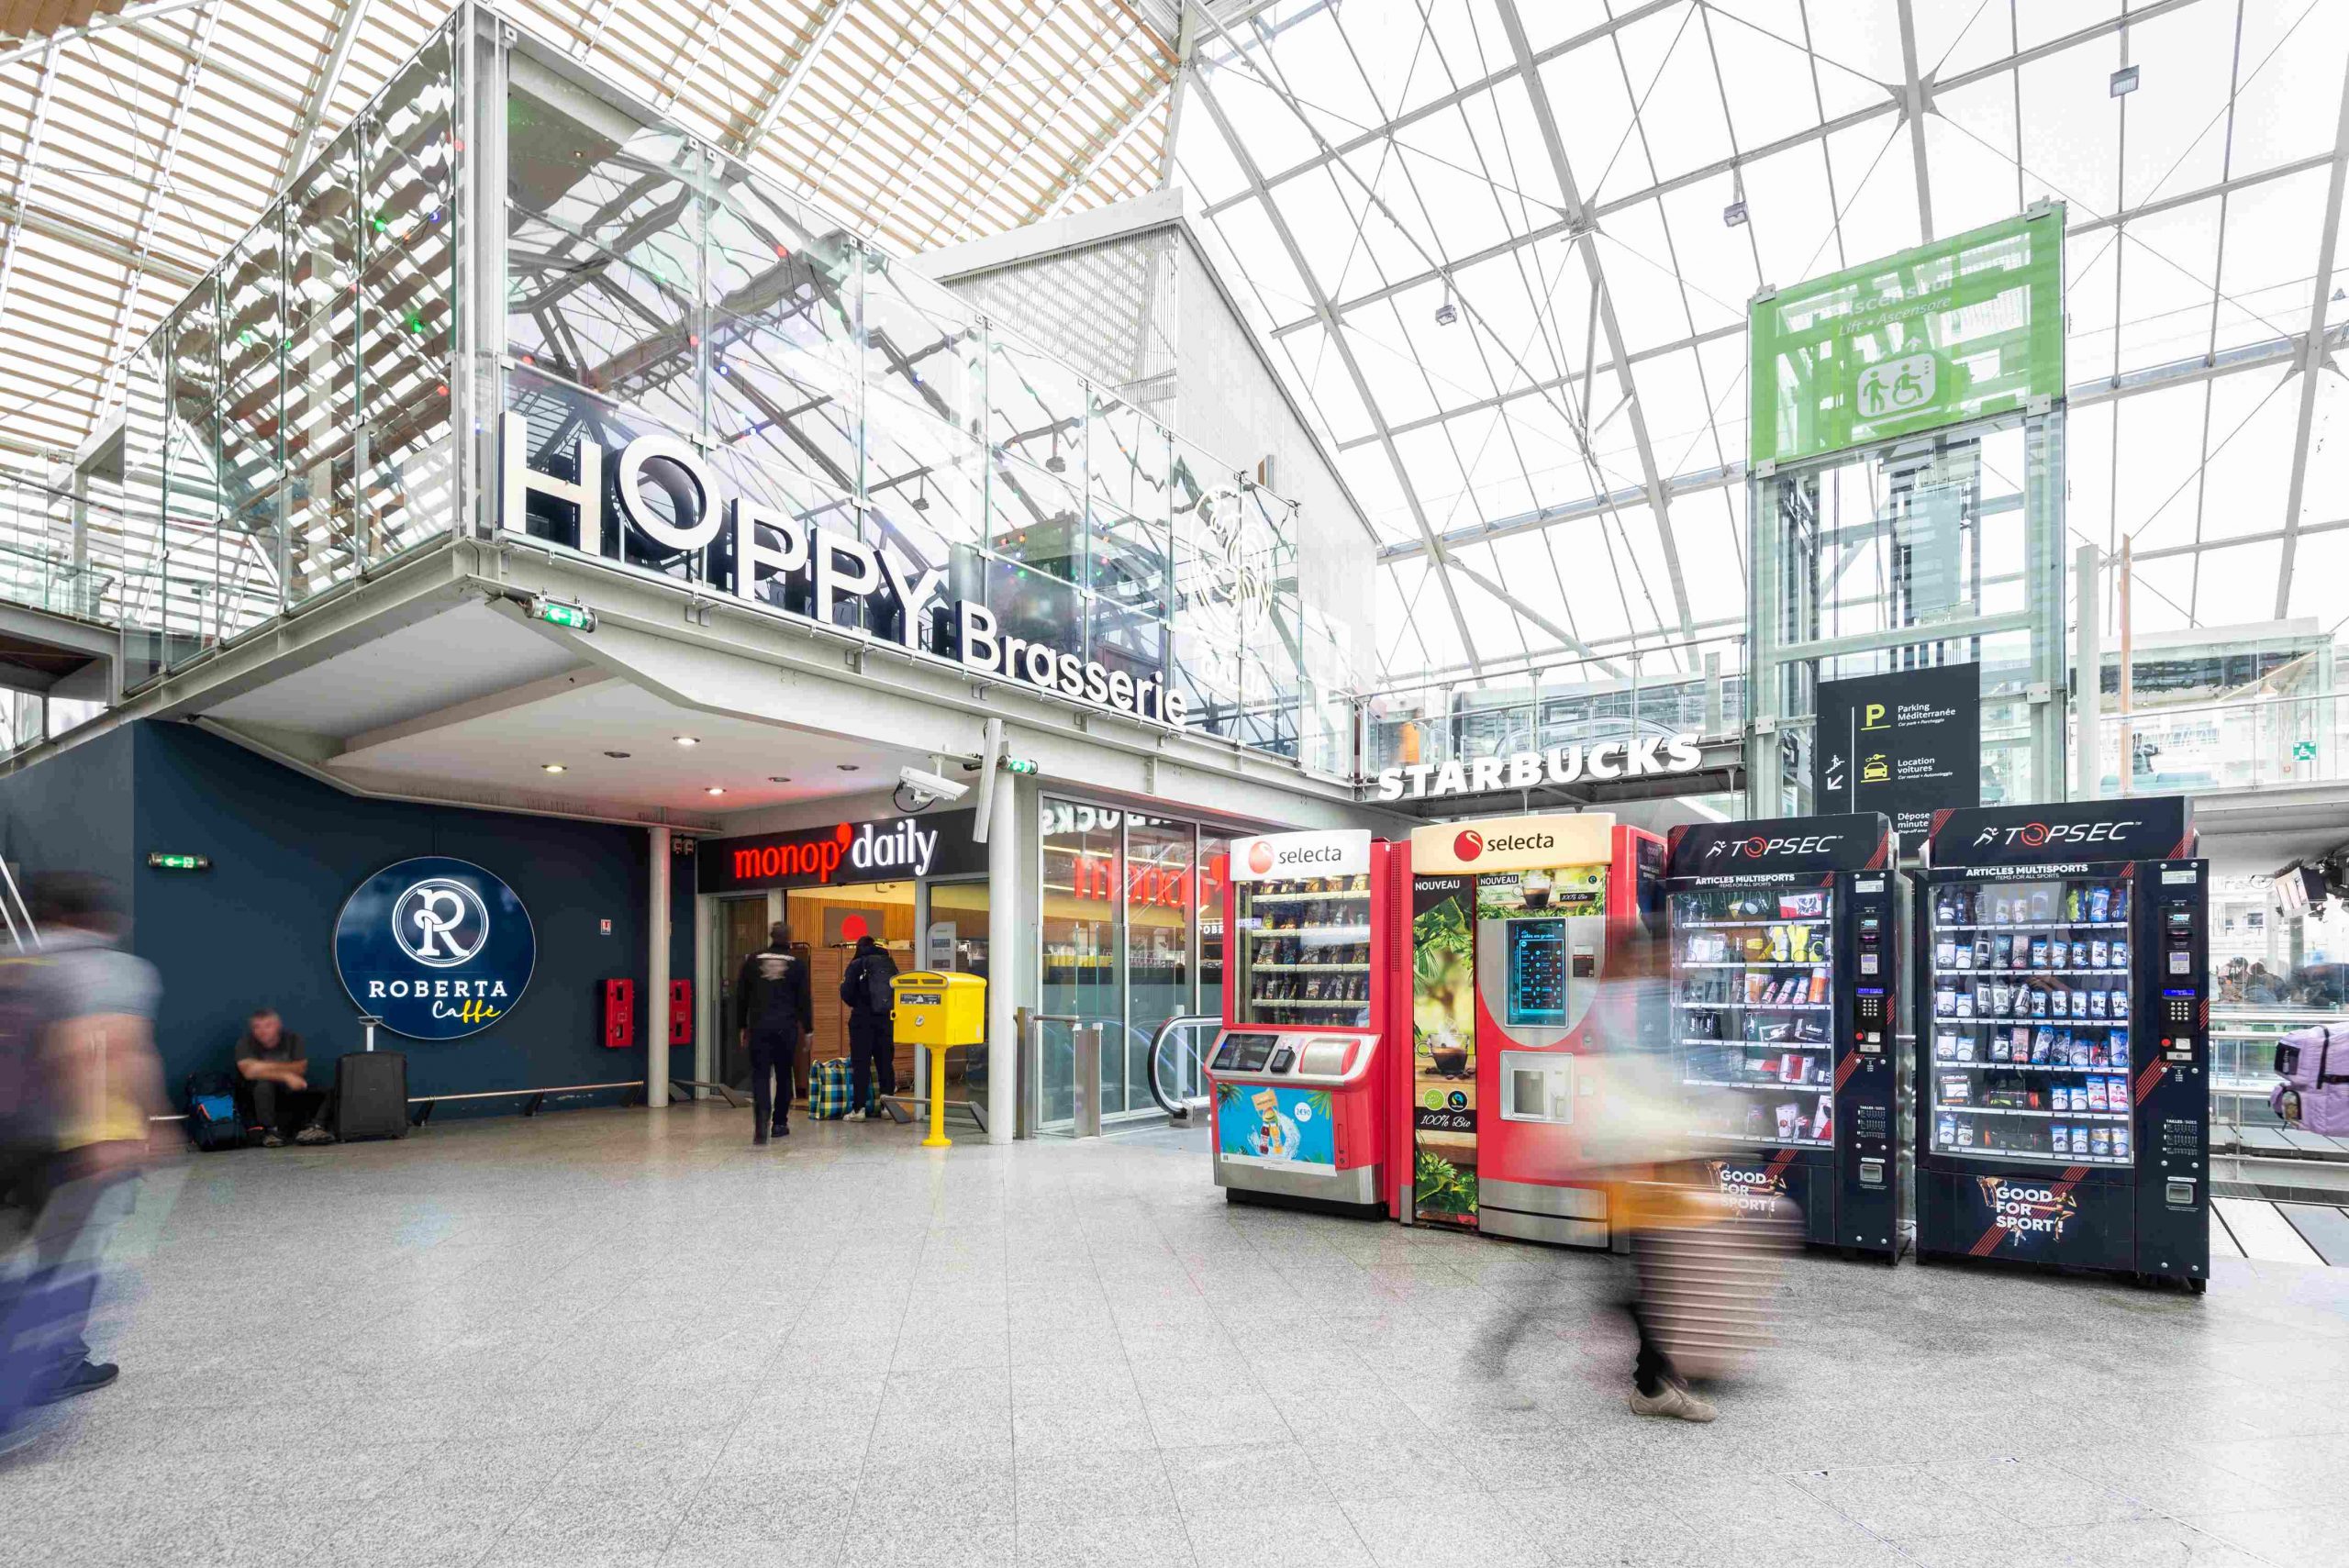 Gare de Lyon - Hoppy Brasserie